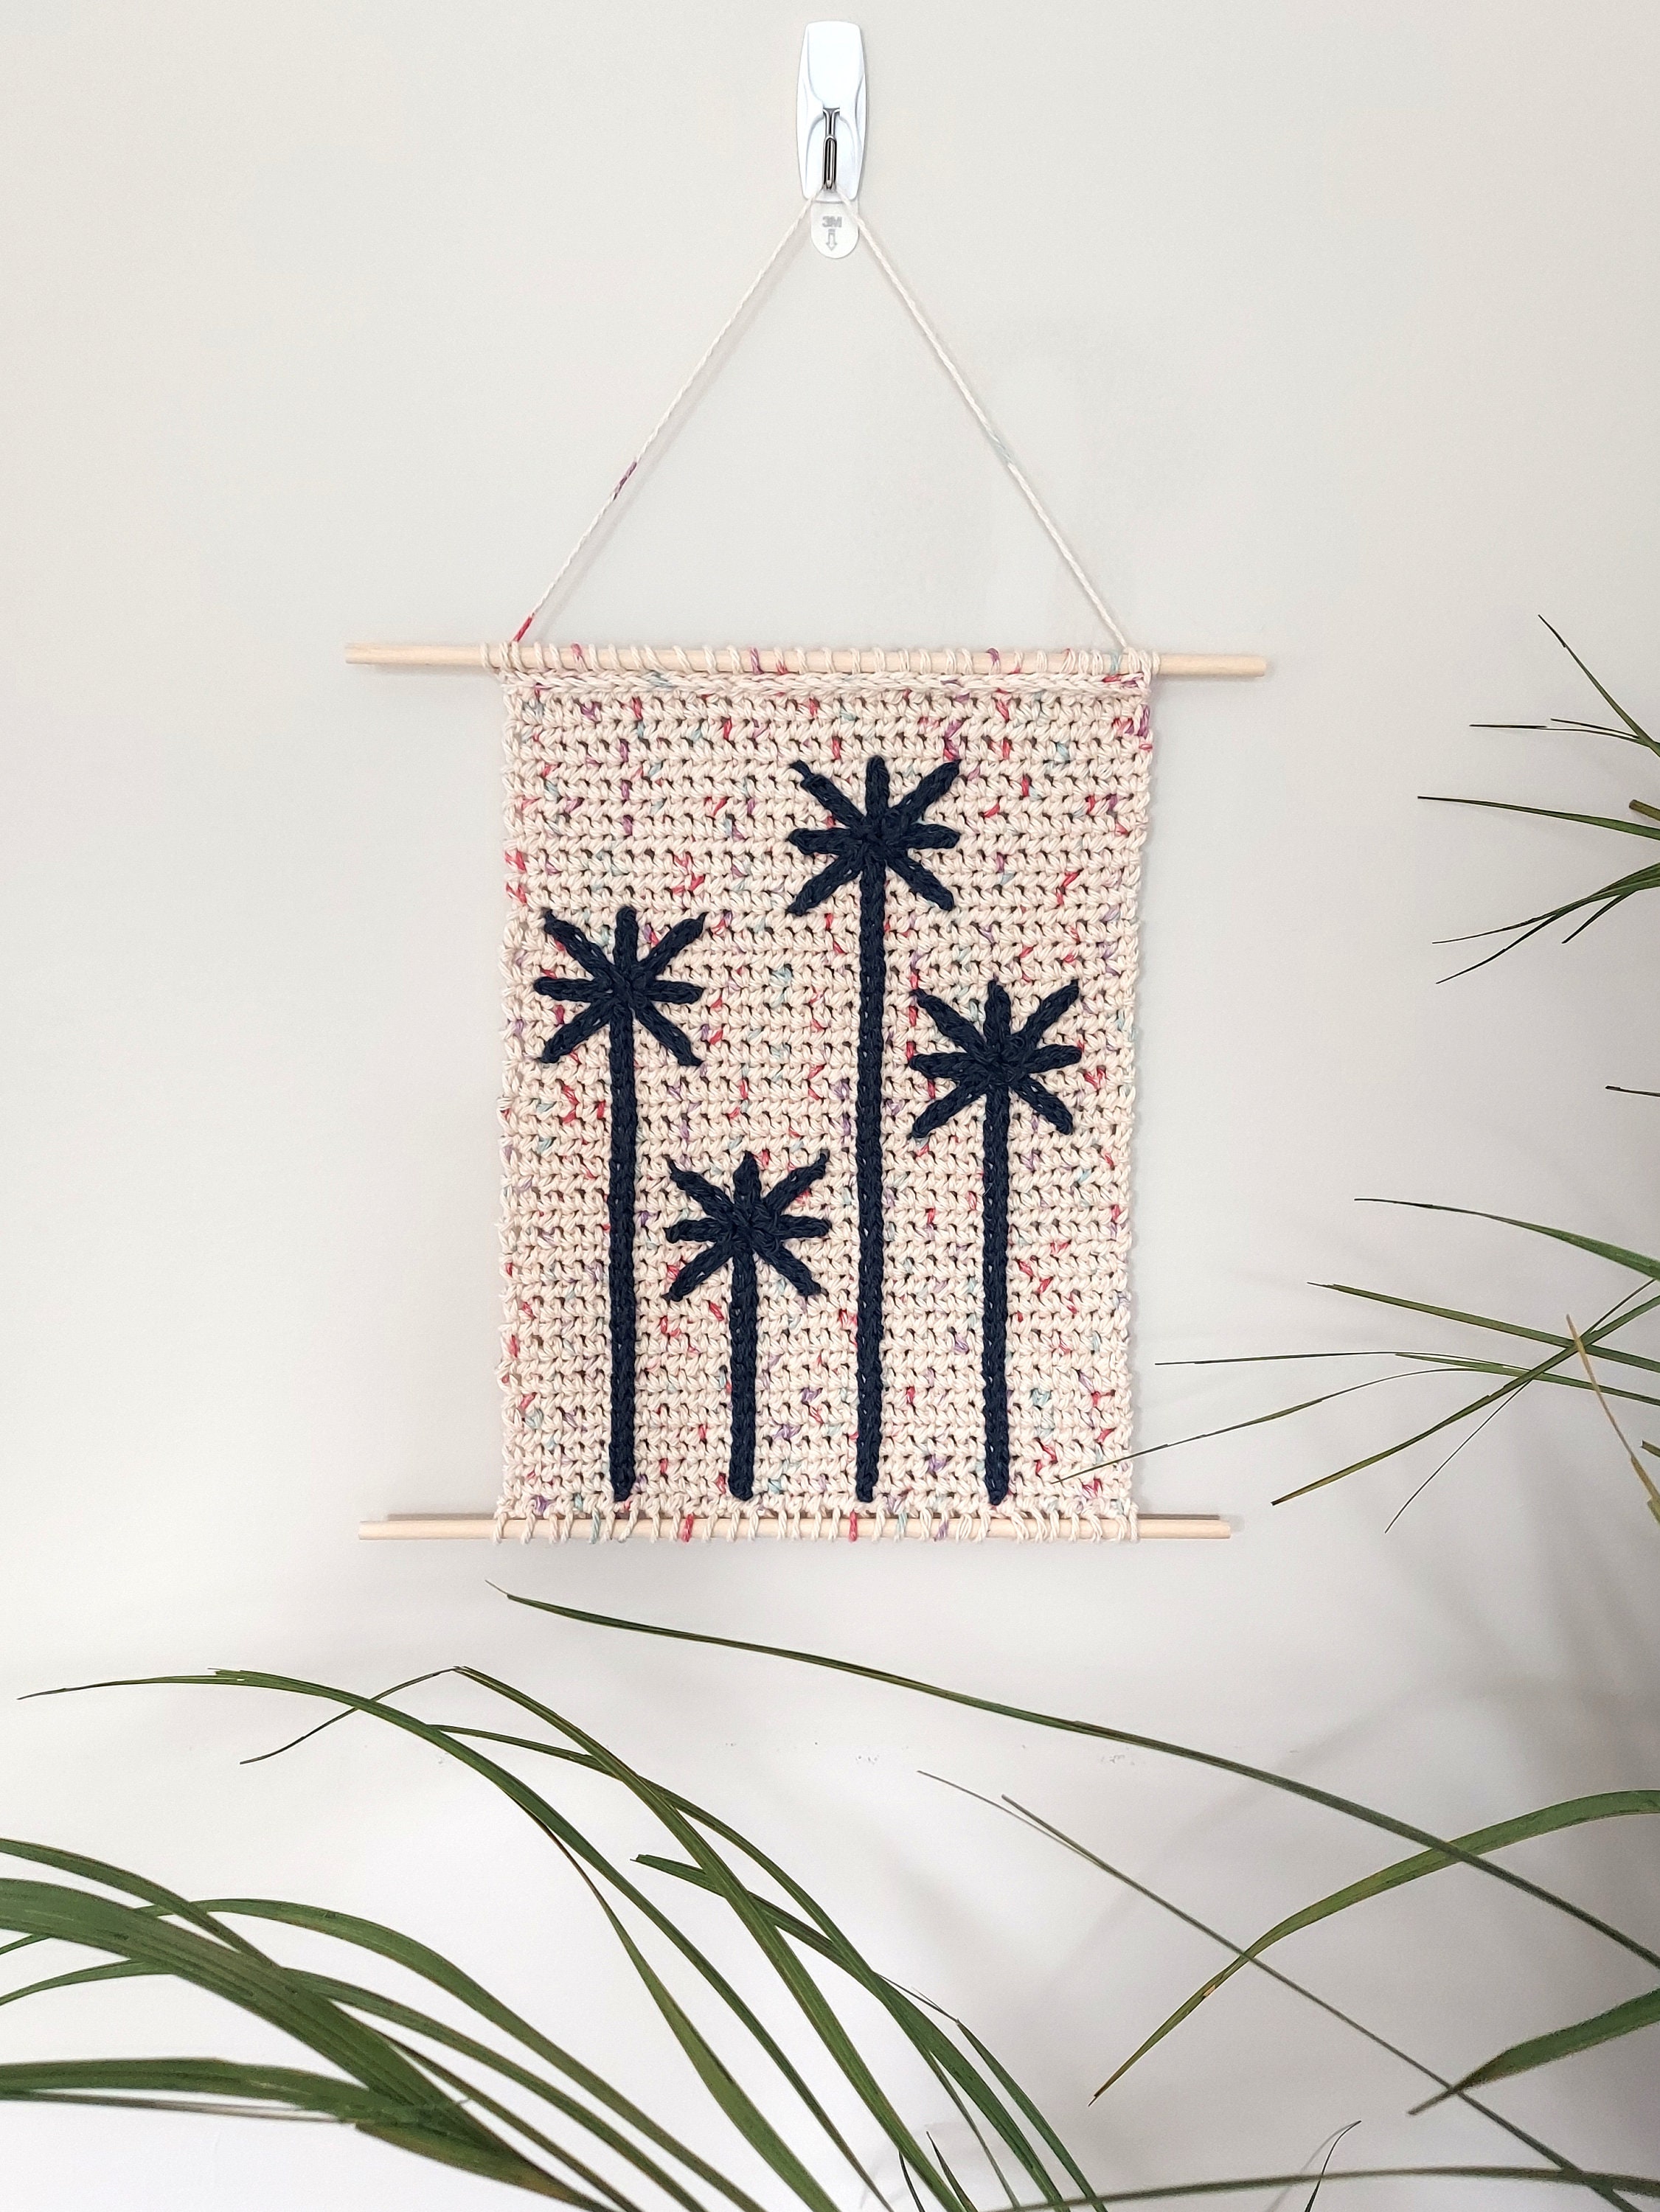 20pcs White Mini Wooden Snowflakes Hanging Christmas Tree Ornaments Home  Decor